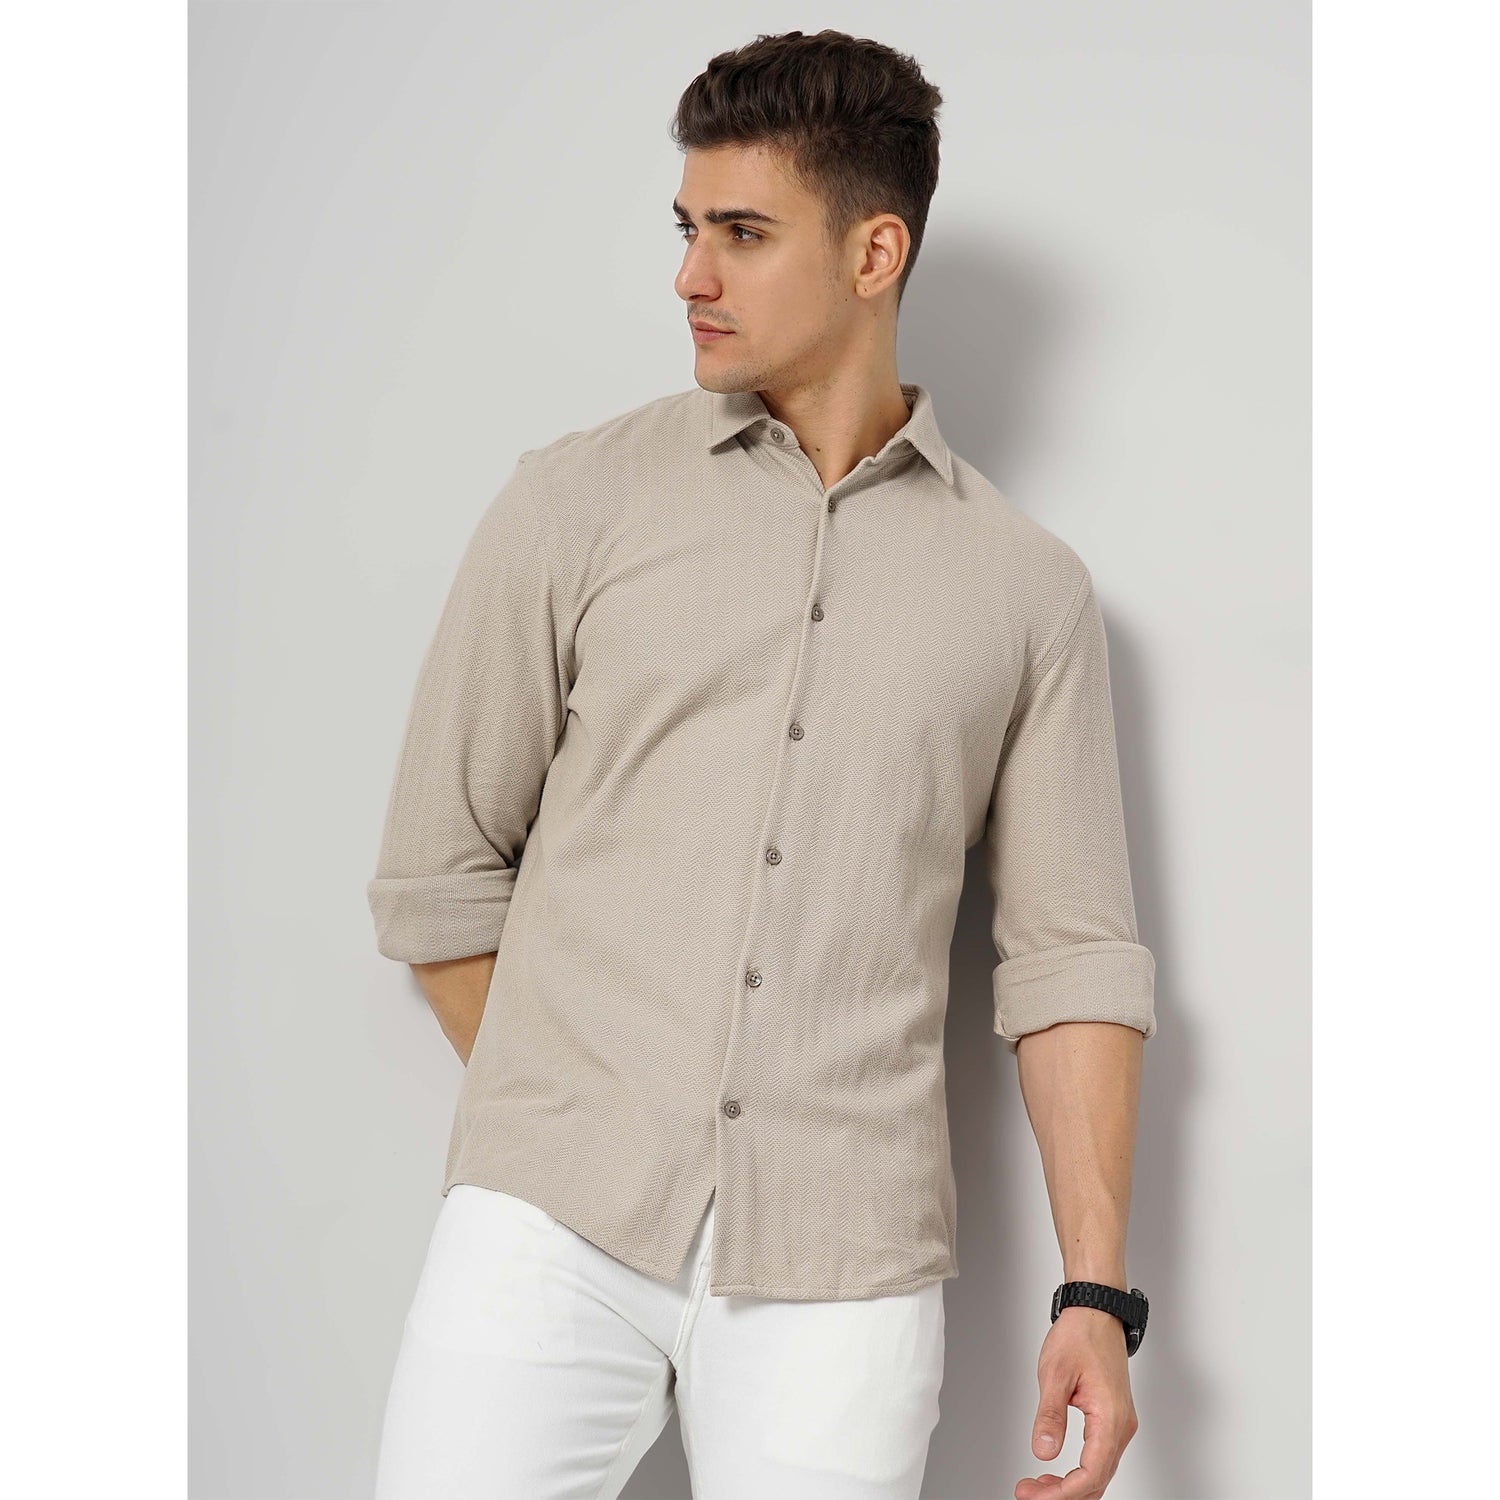 Beige Cotton Casual Shirt